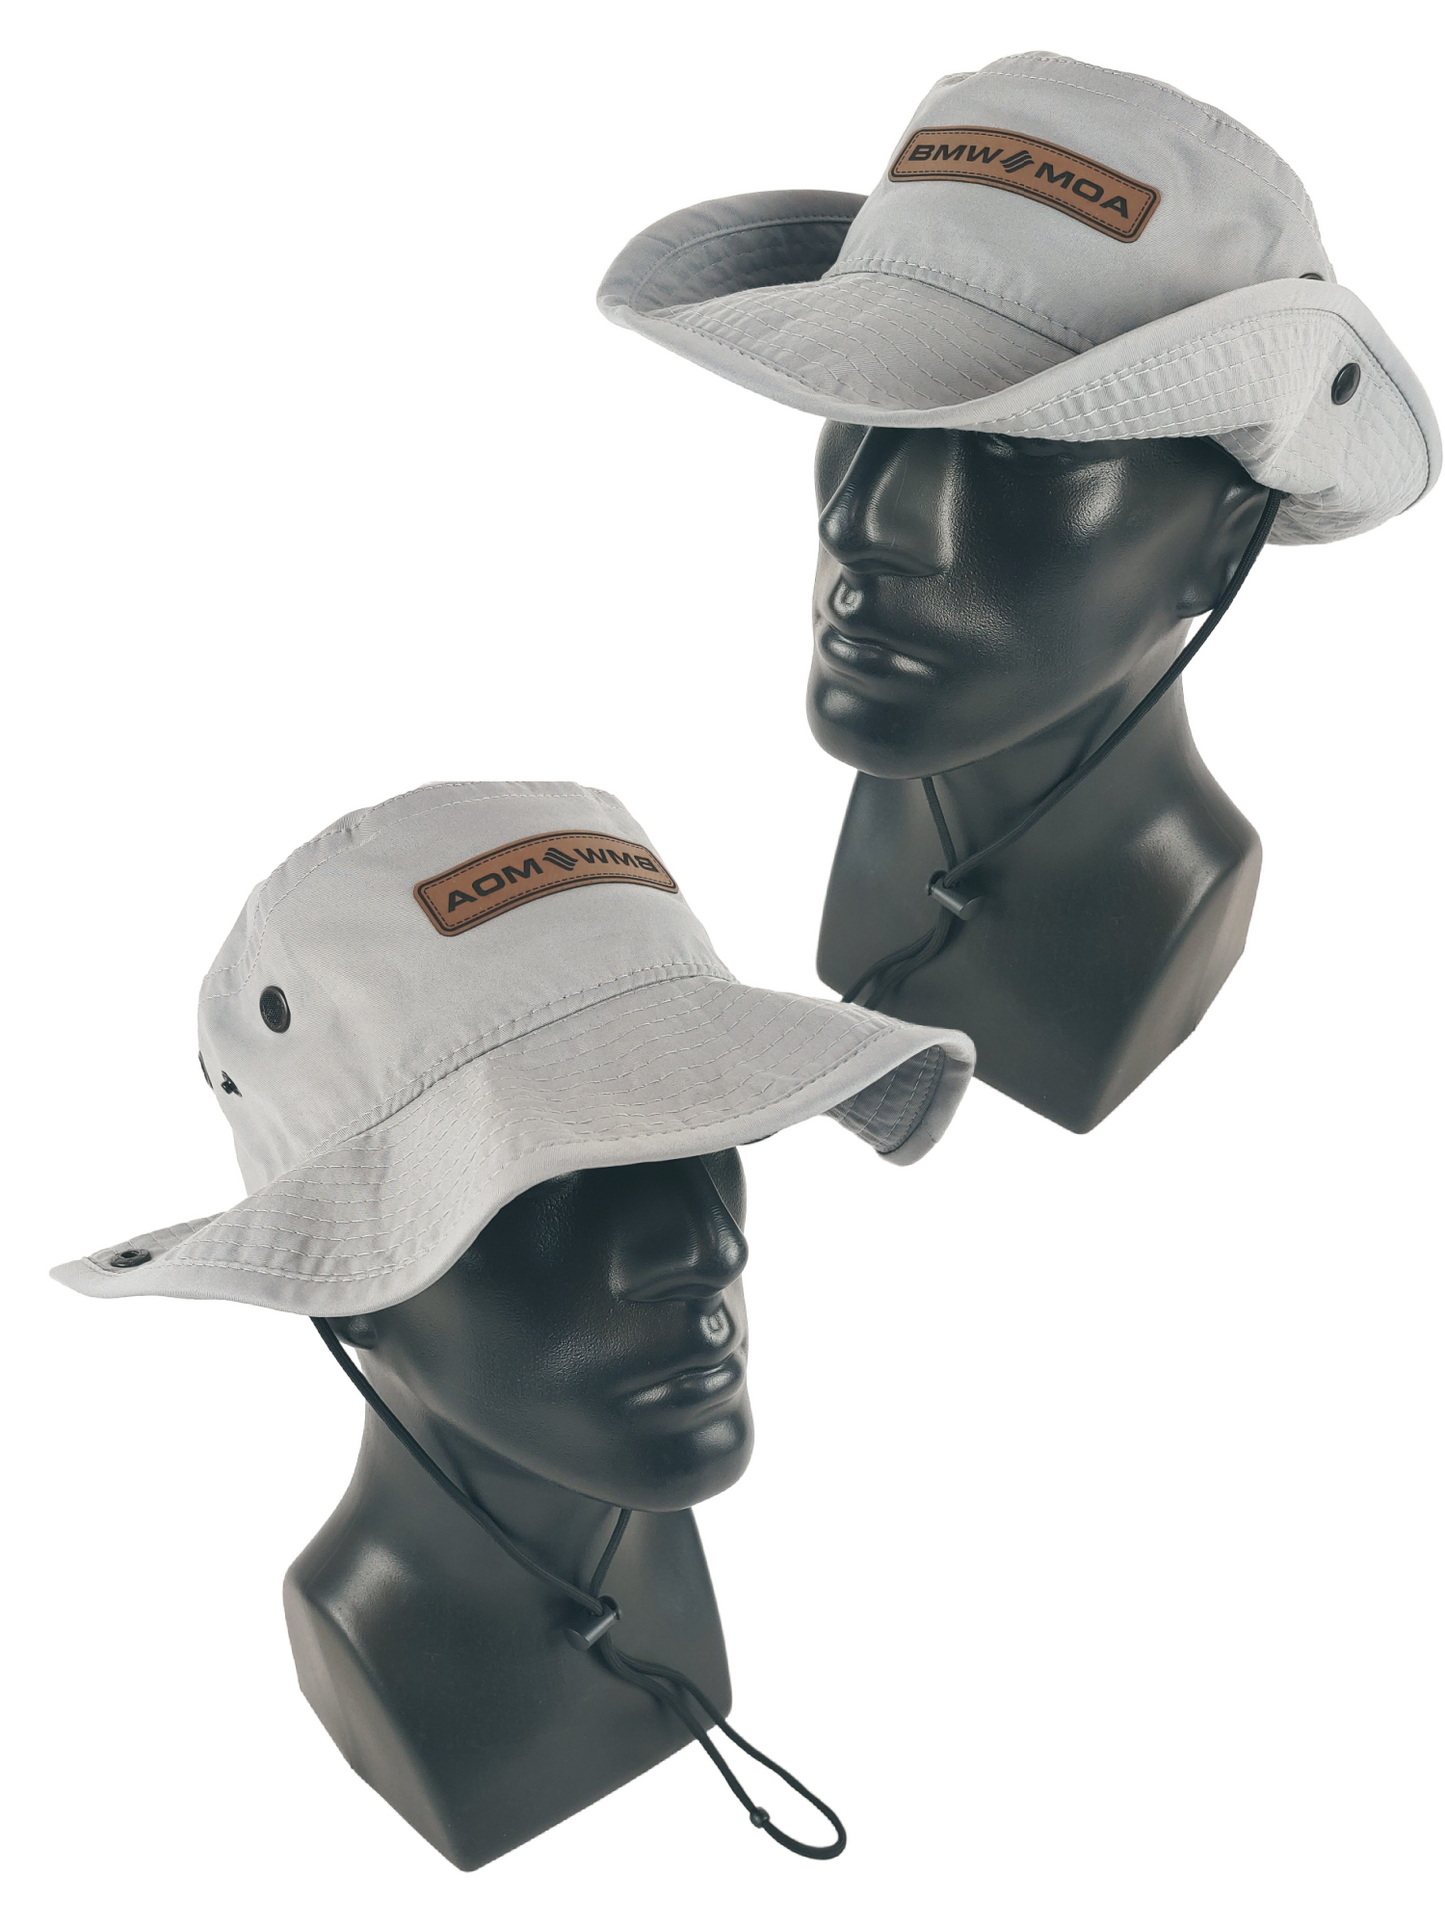 Versatile Protective Sun Hat - Wide Brim - Unisex - Light Grey